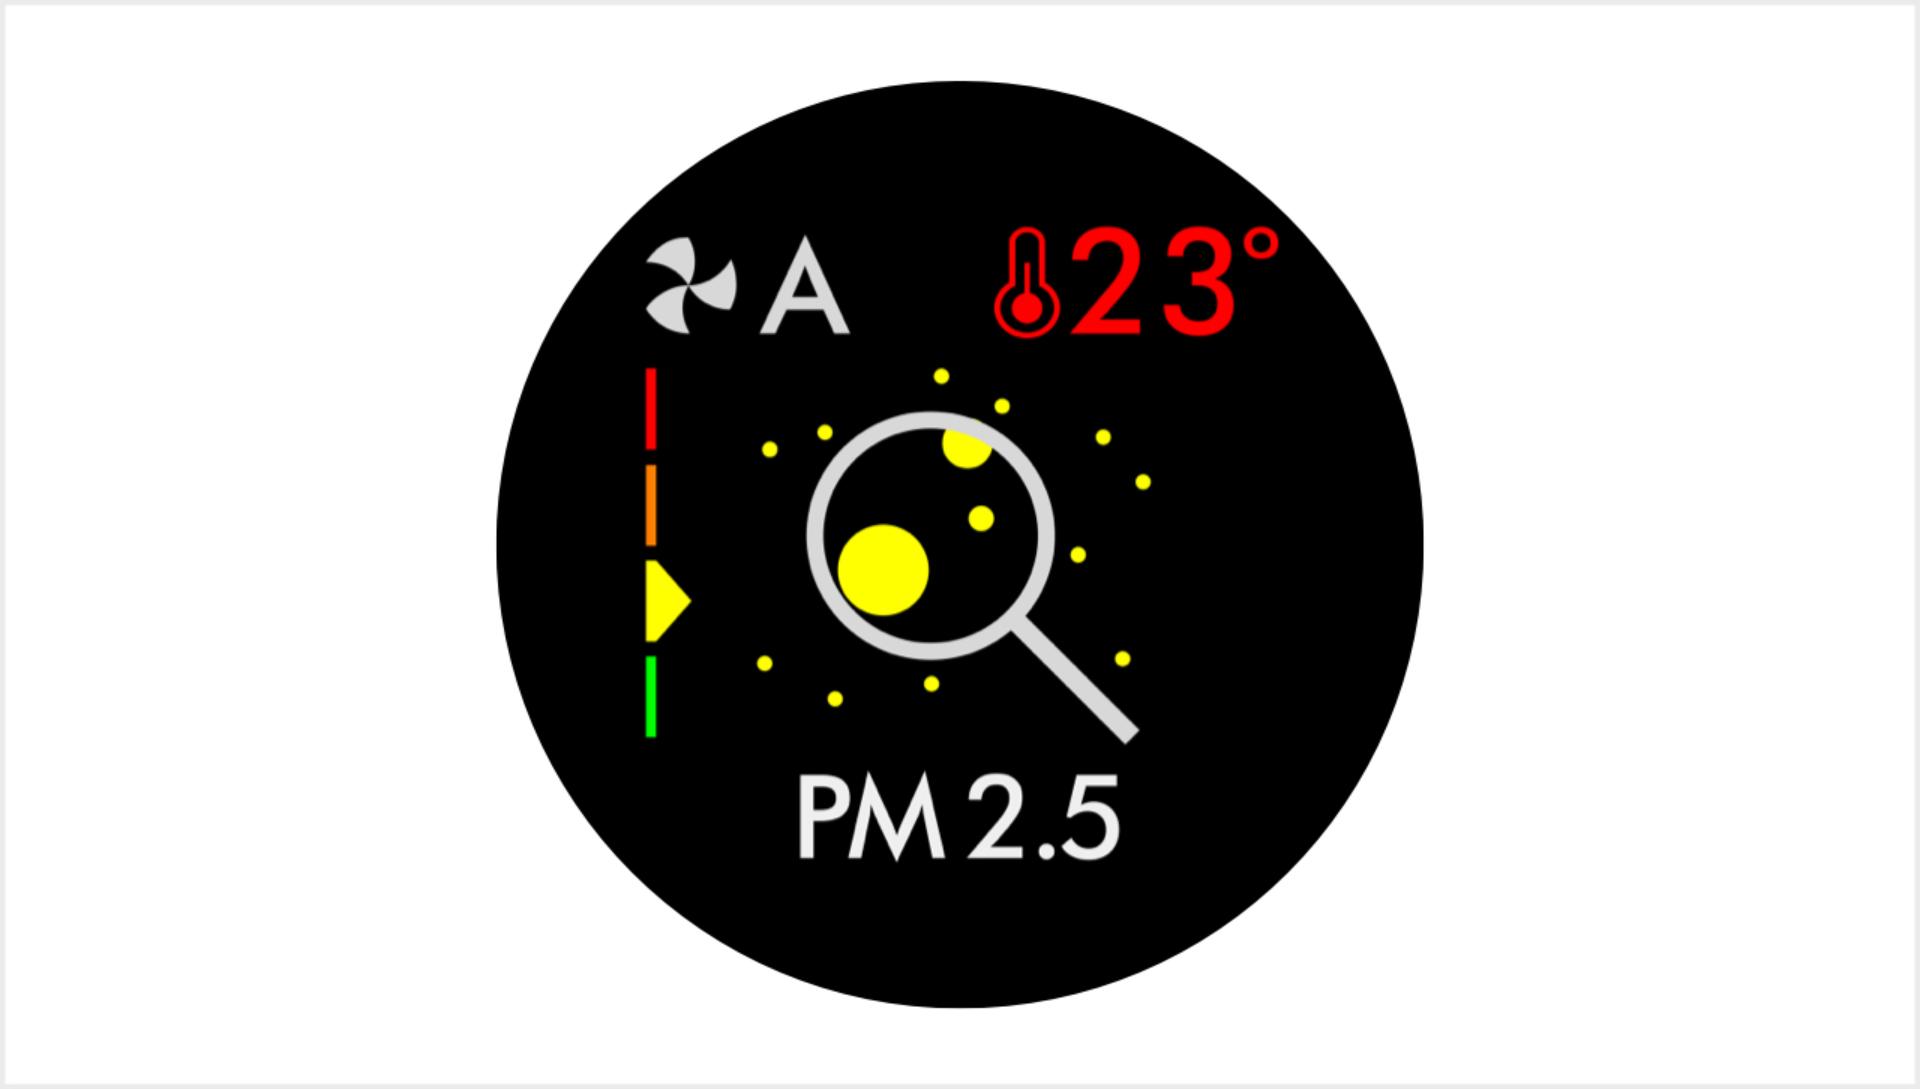 Pantalla del materia particulada PM2.5